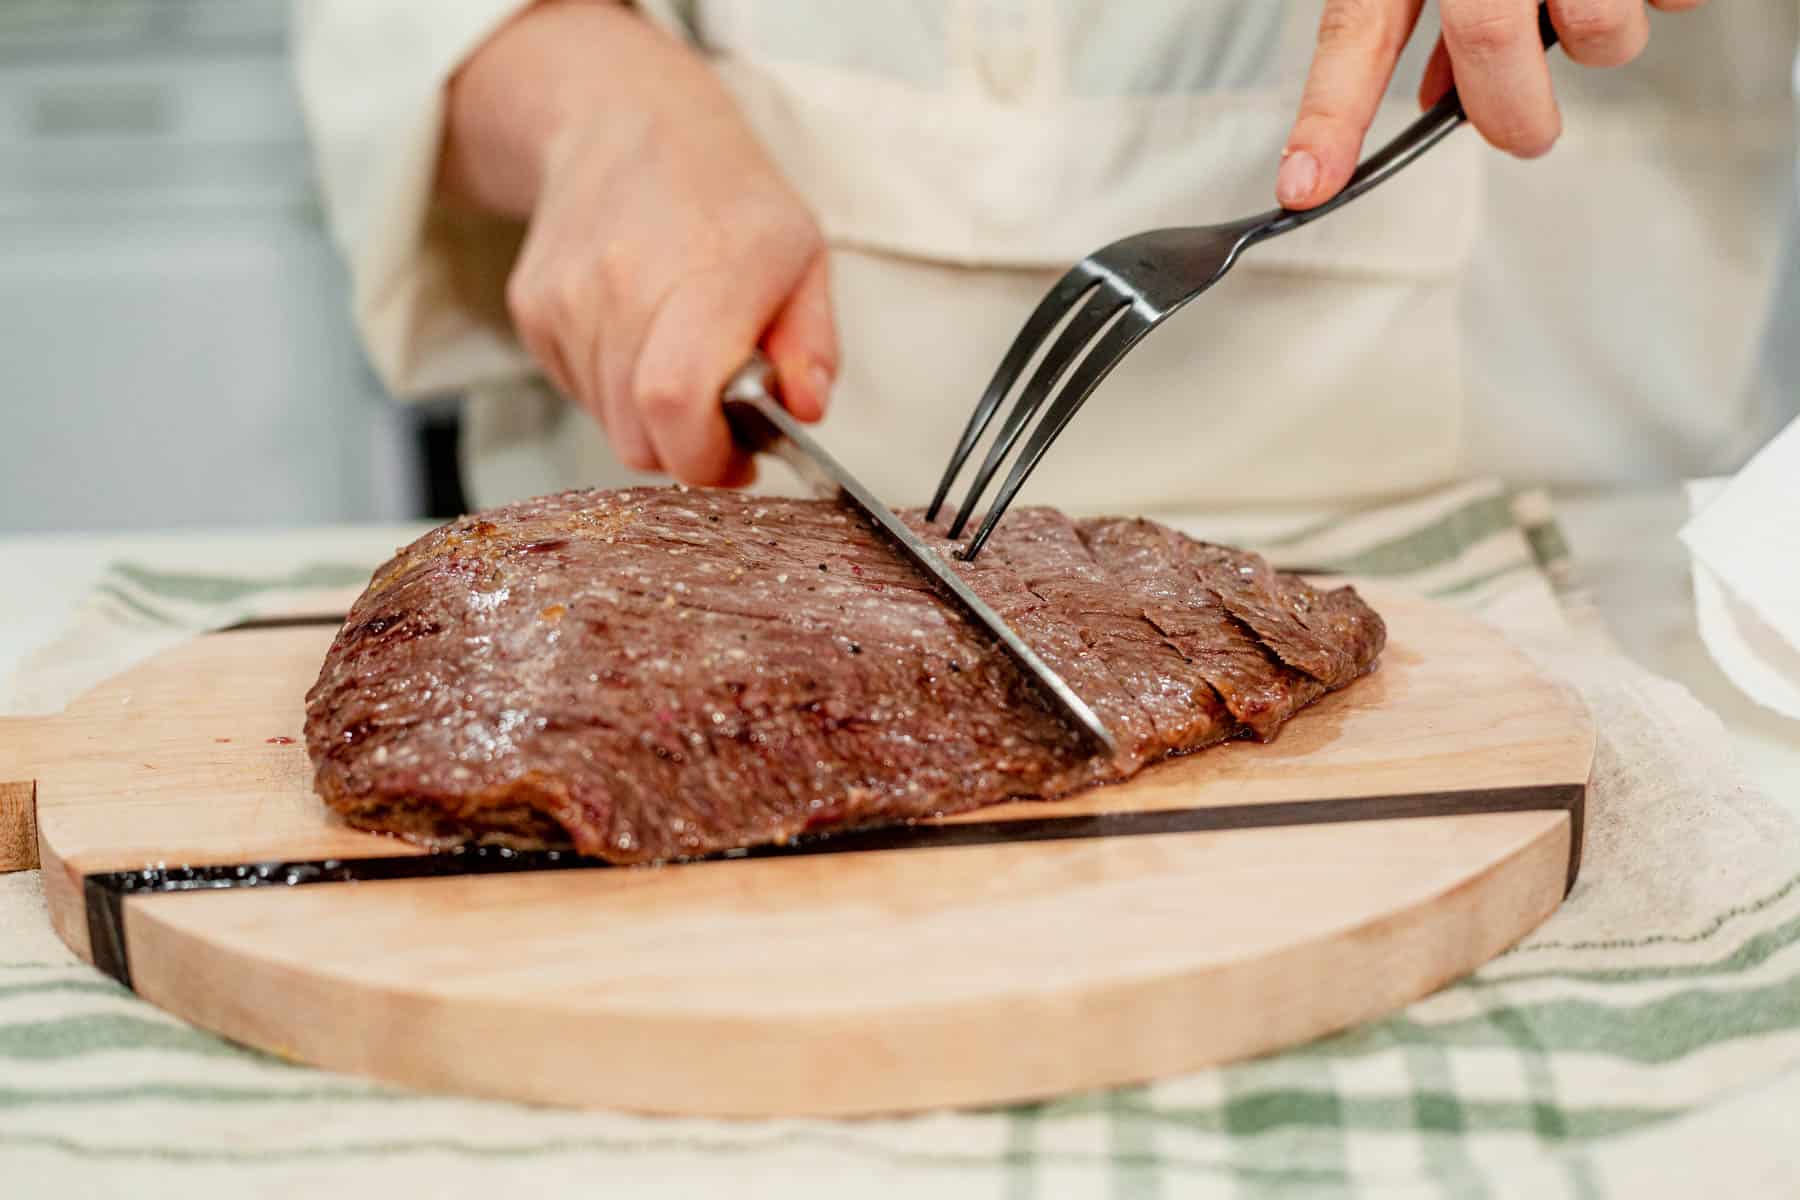 how to cut flank steak